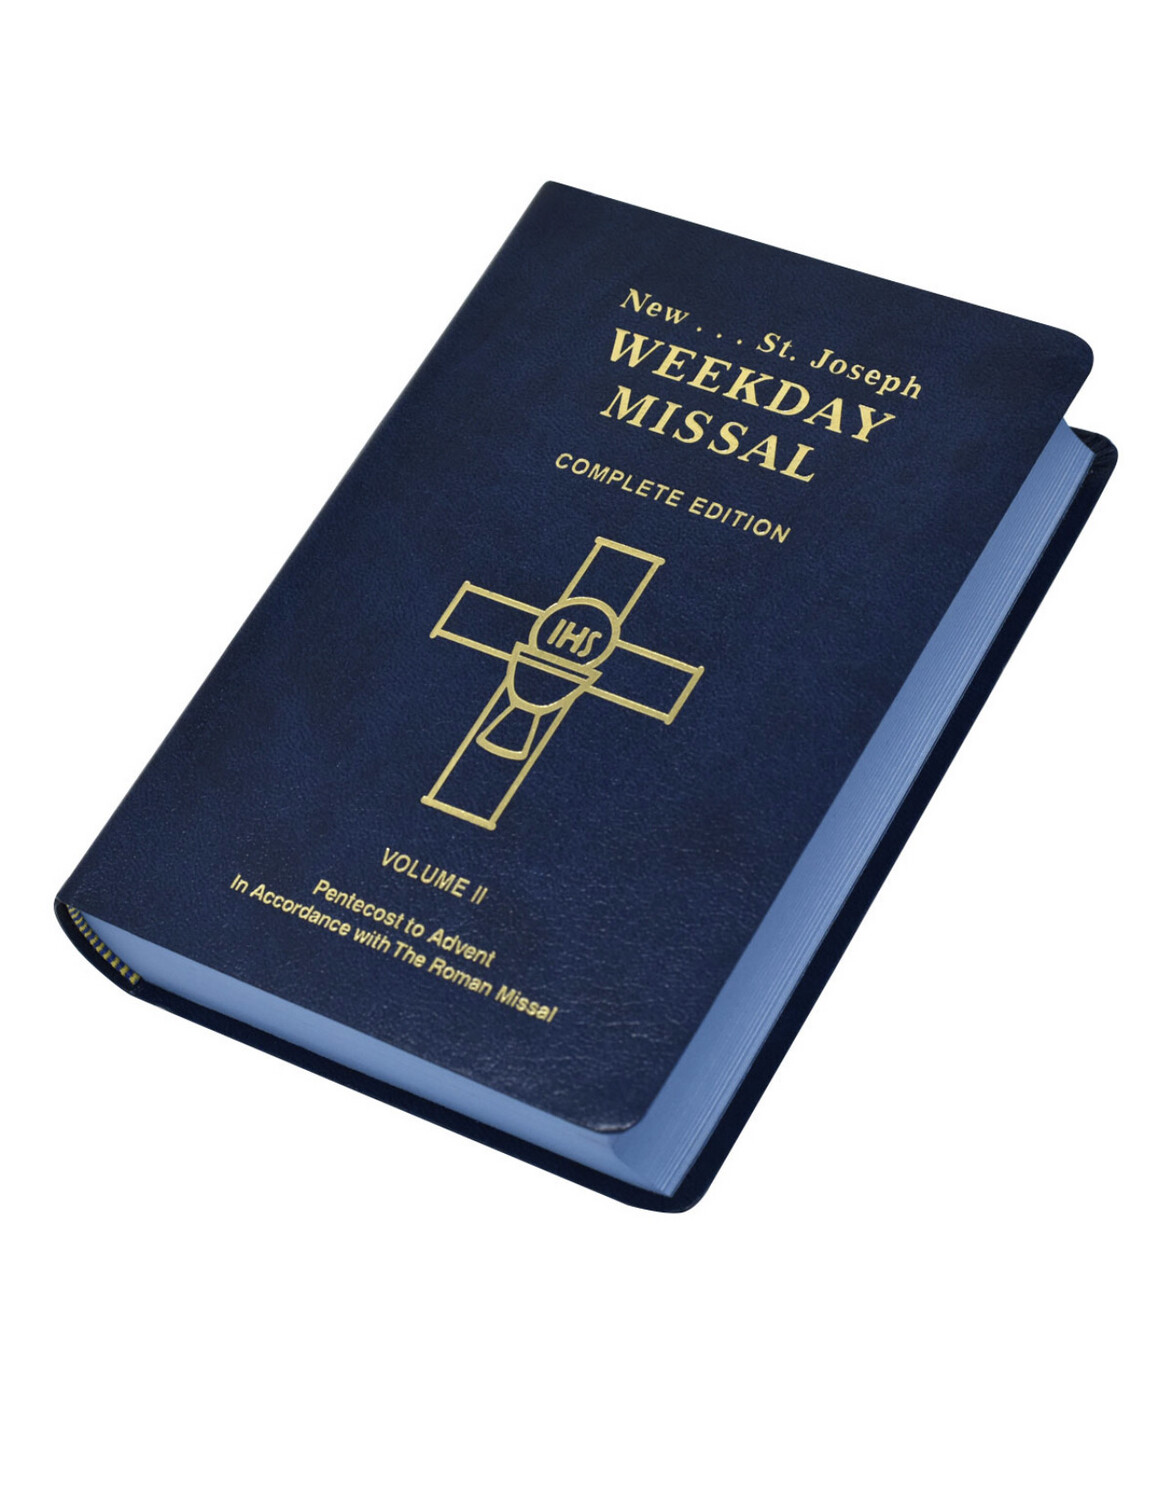 St Joseph Weekday Missal (Vol. 2) 921/09